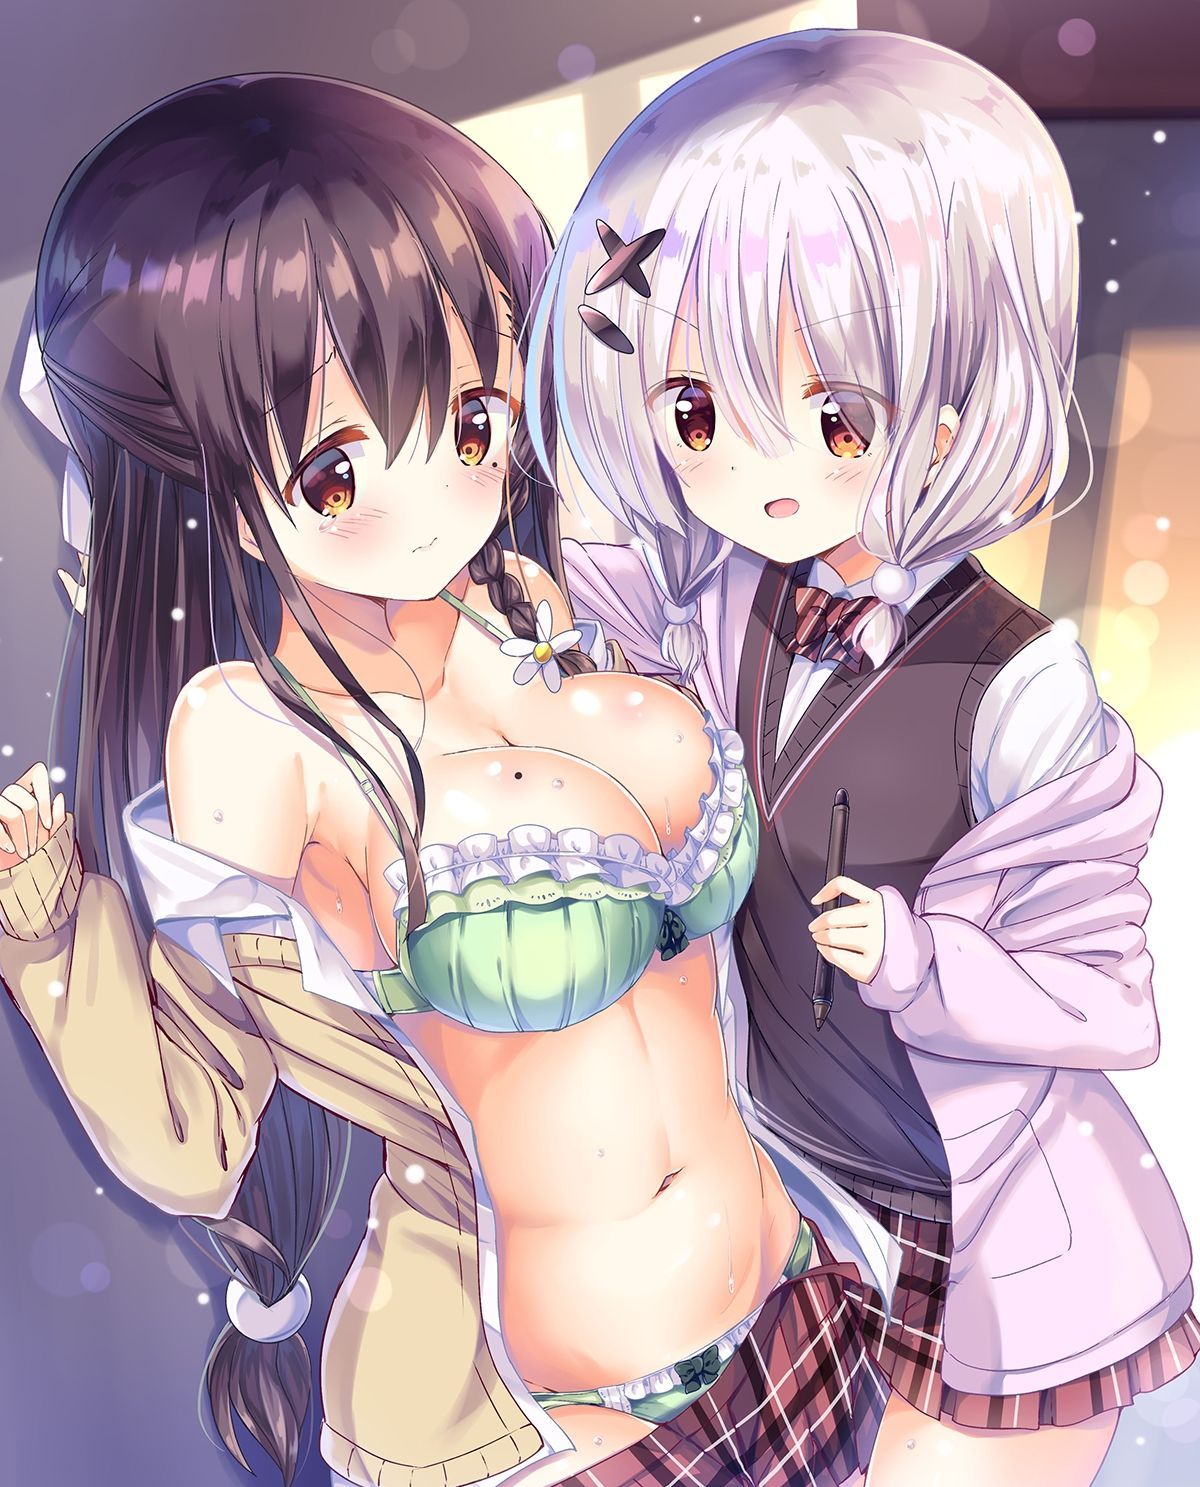 Erotic anime summary underwear is green beautiful girls [secondary erotic] 9